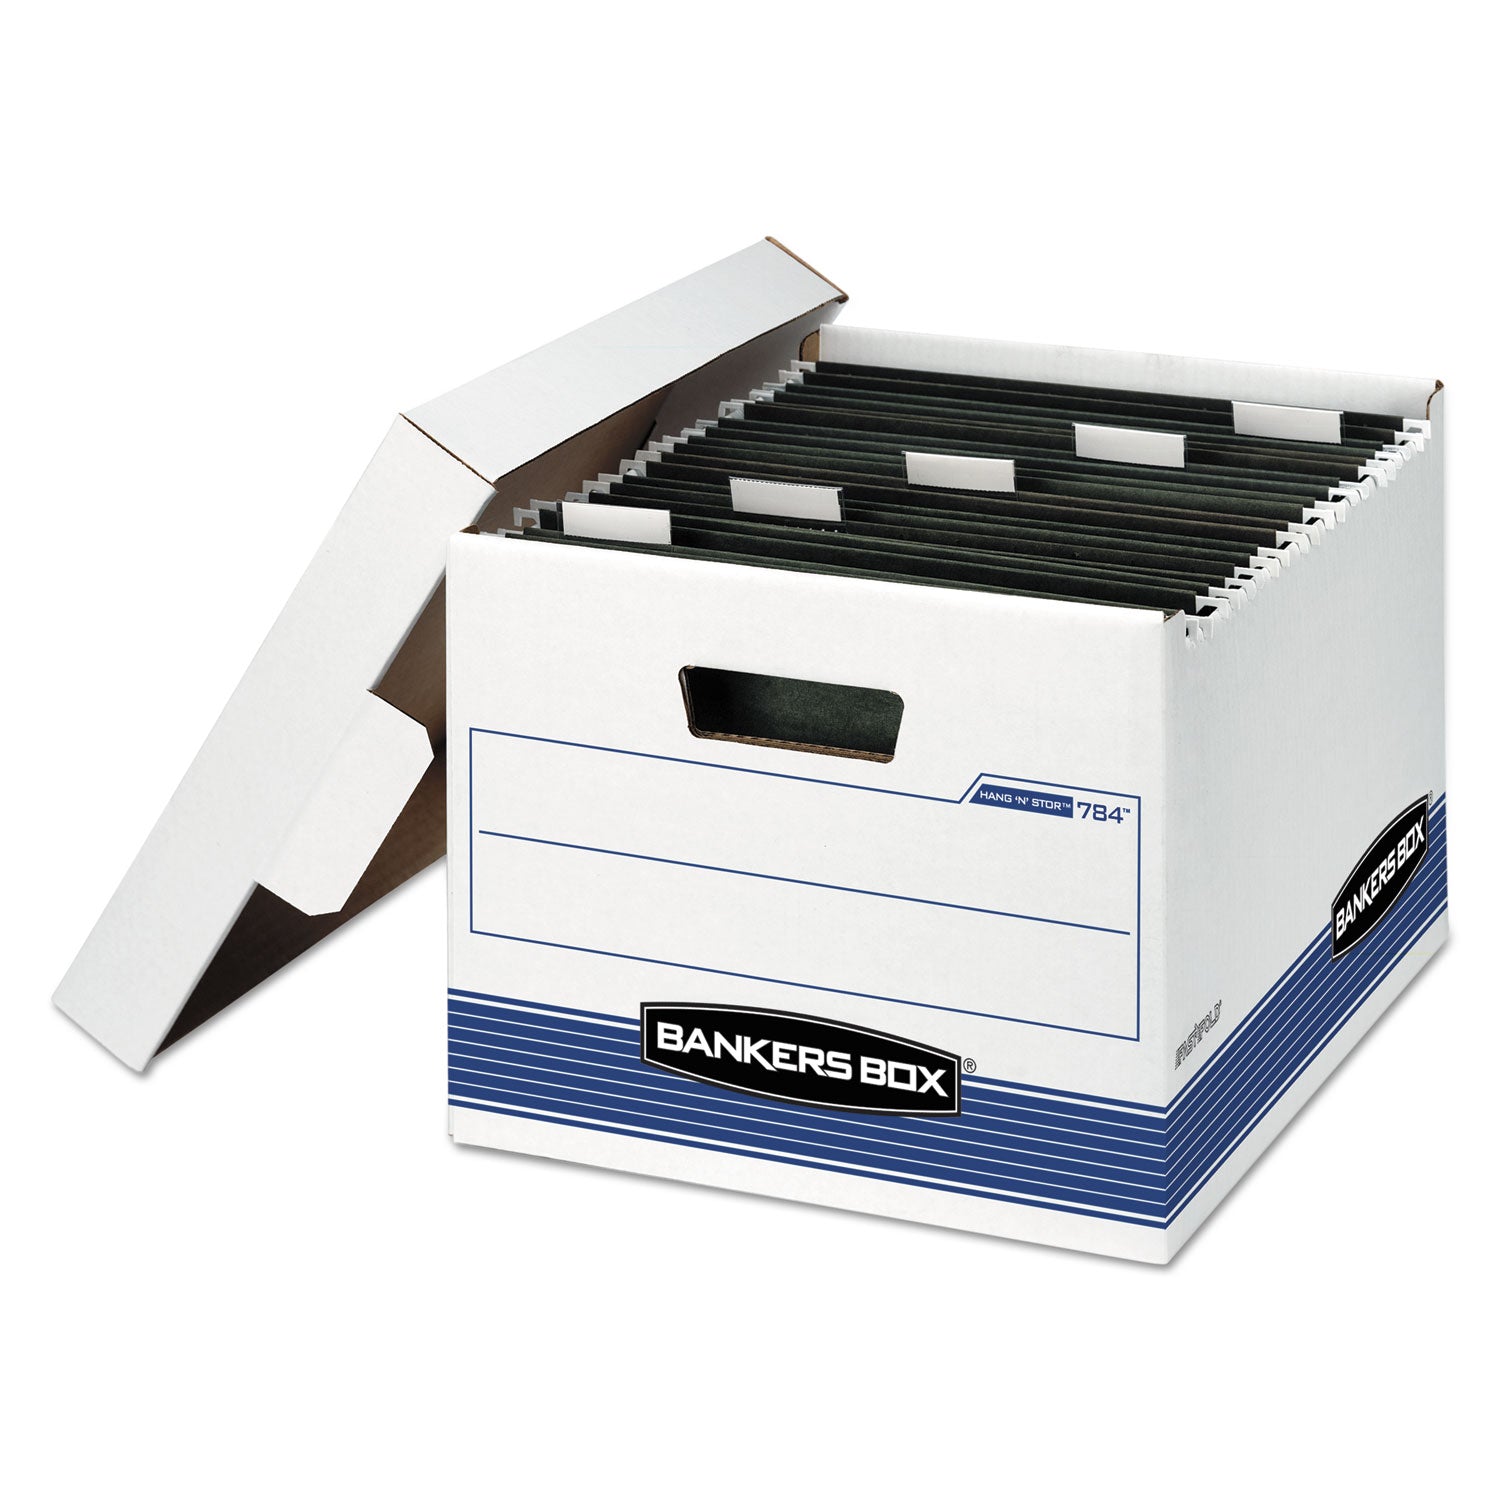 HANG'N'STOR Medium-Duty Storage Boxes, Letter Files, 12.63" x 15.63" x 10", White/Blue, 4/Carton - 